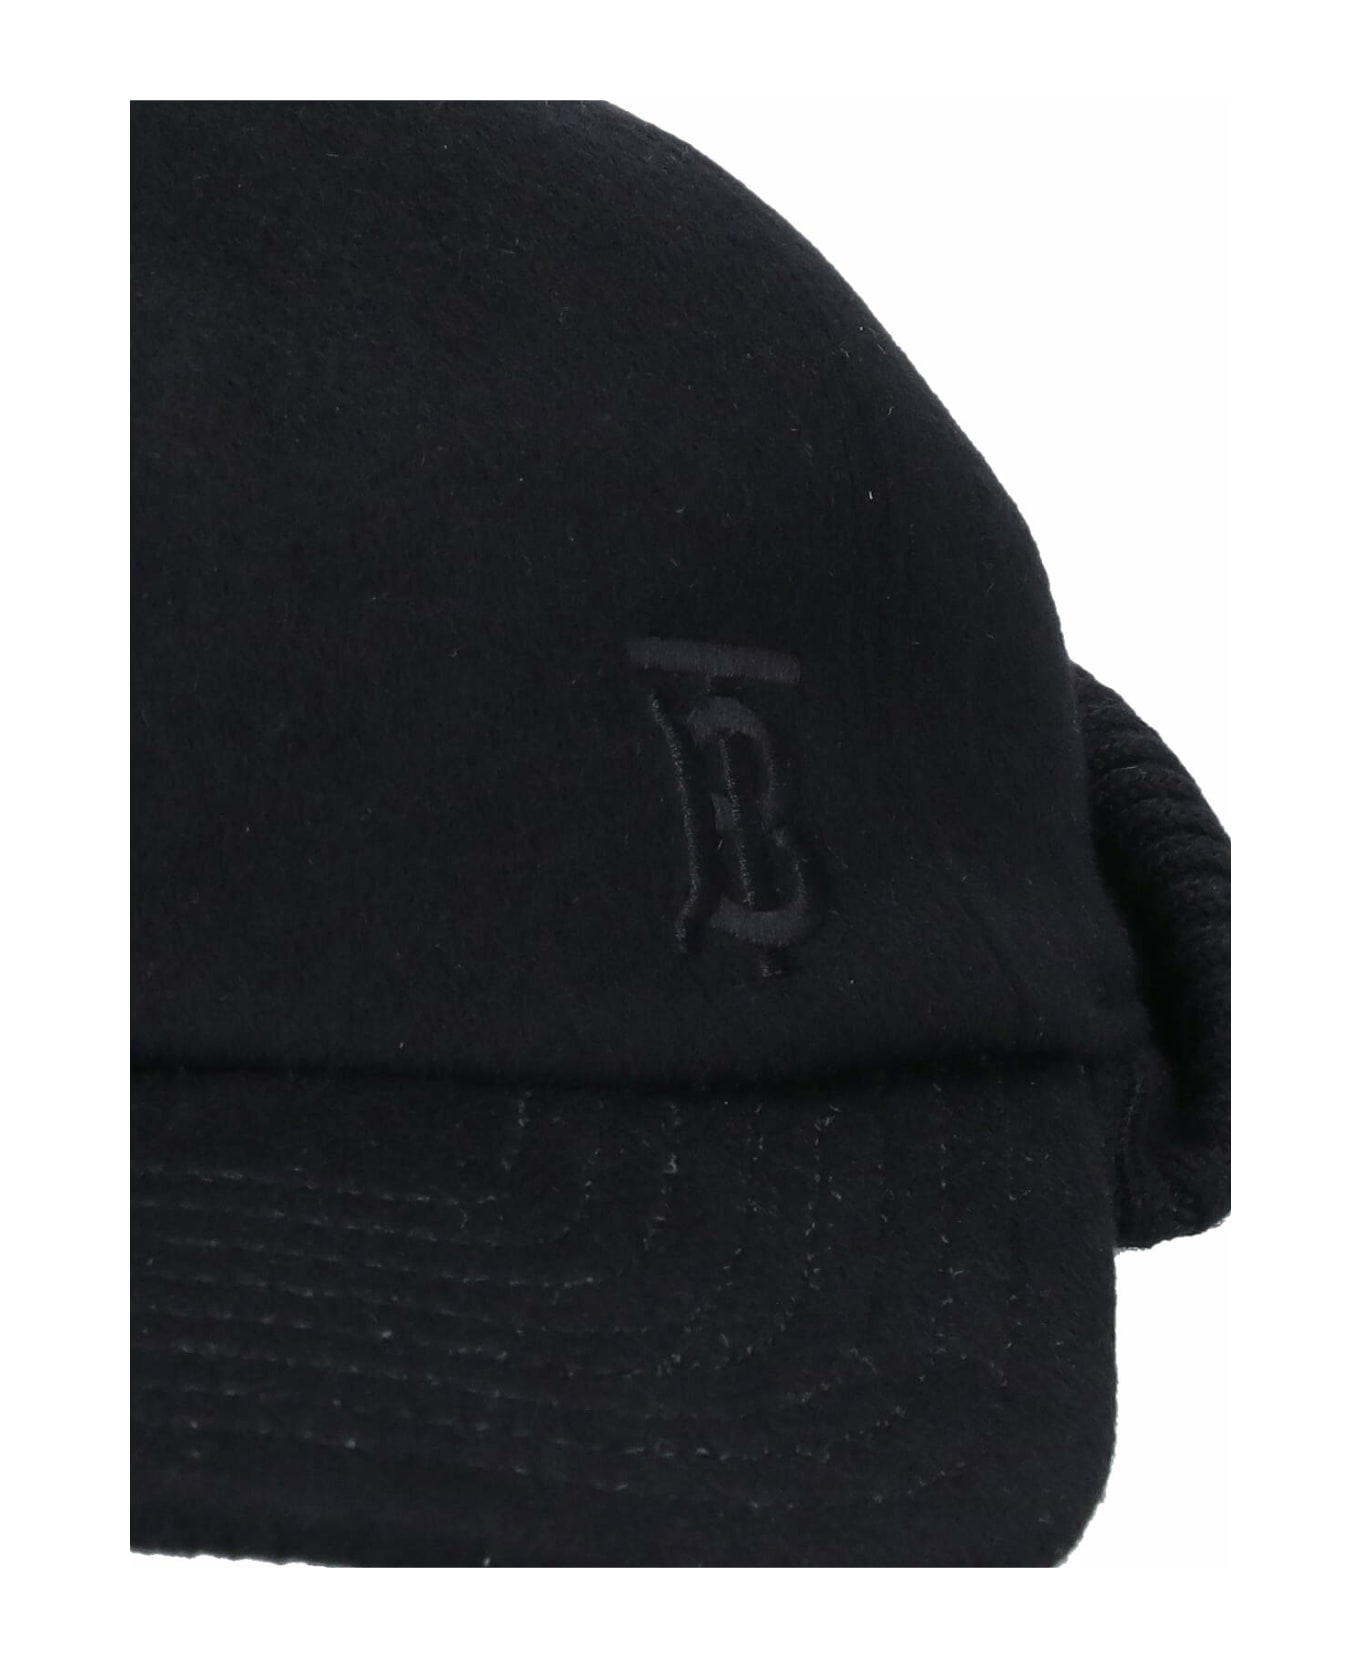 Burberry Hat - Black